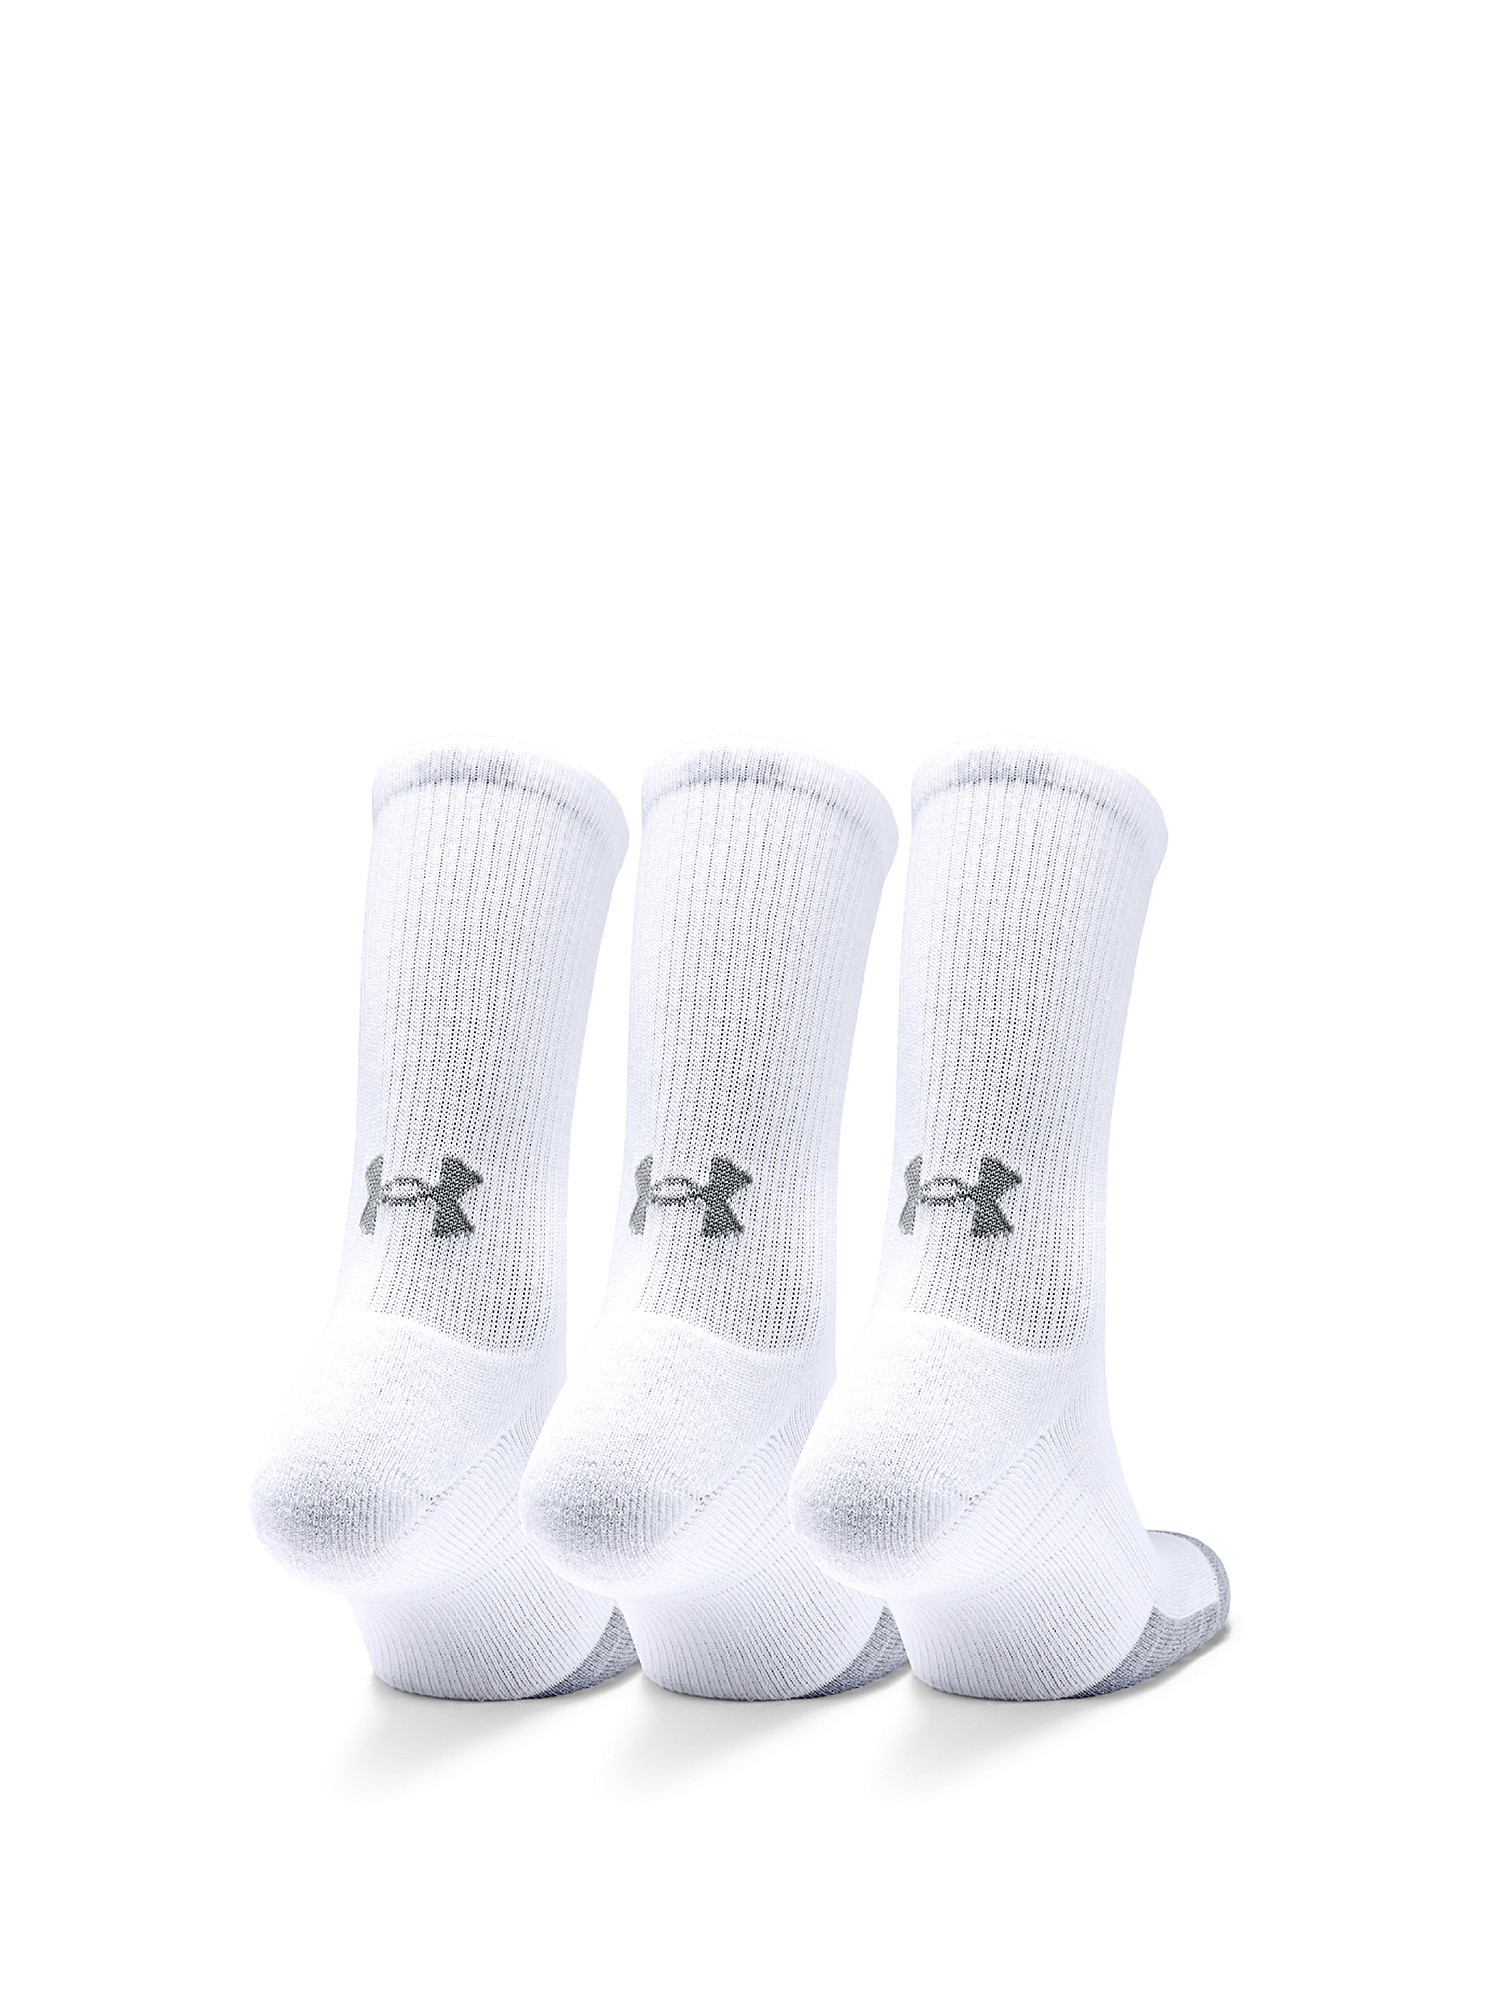 Under Armour - HeatGear® Crew socks, White, large image number 4